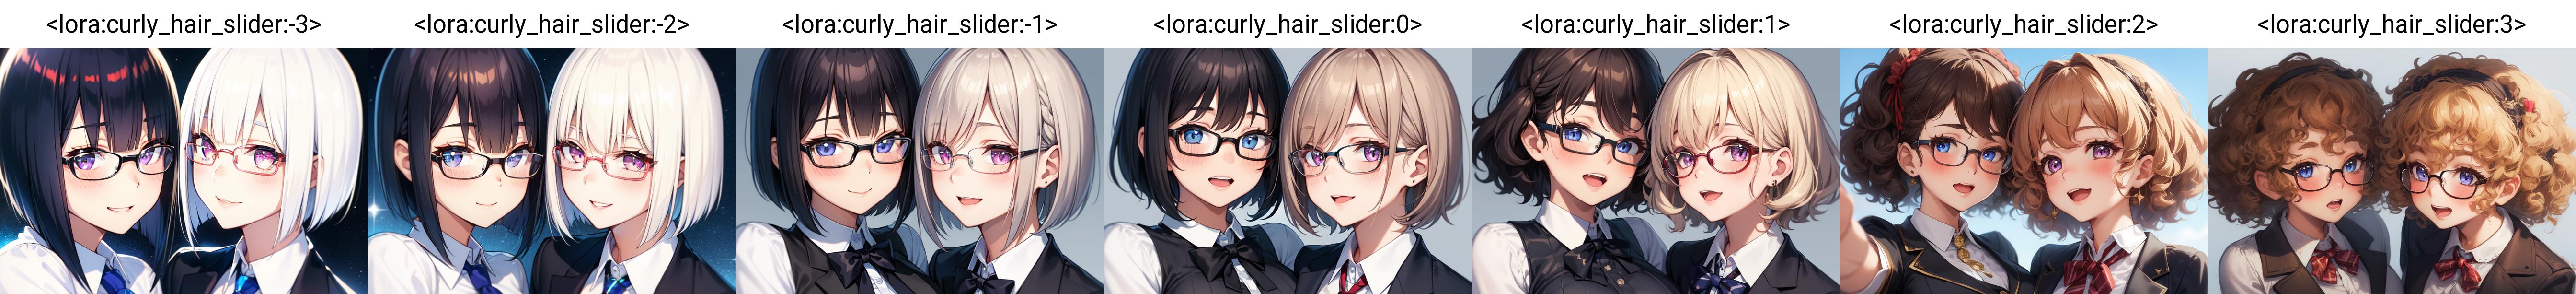 Curly Hair Slider image by kurodahuga843